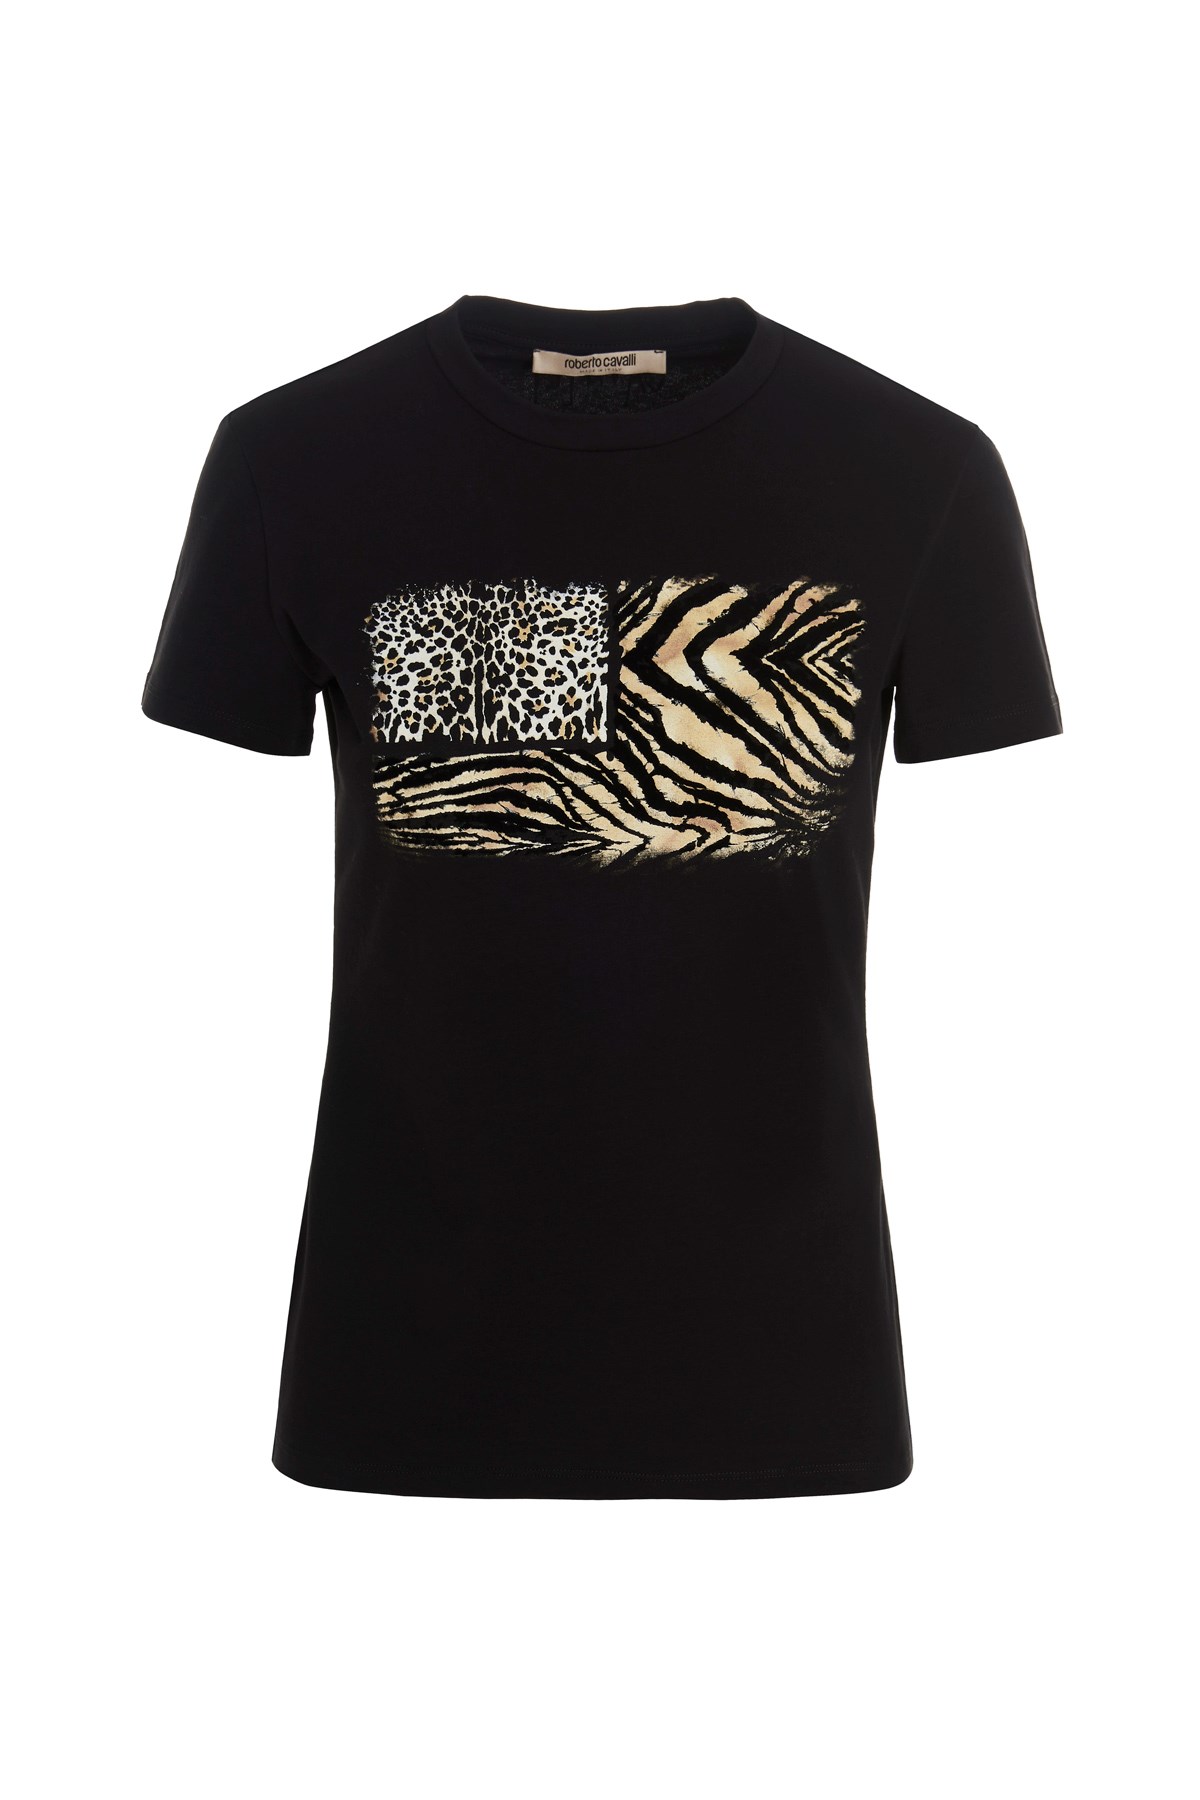 ROBERTO CAVALLI Animal Print T-Shirt